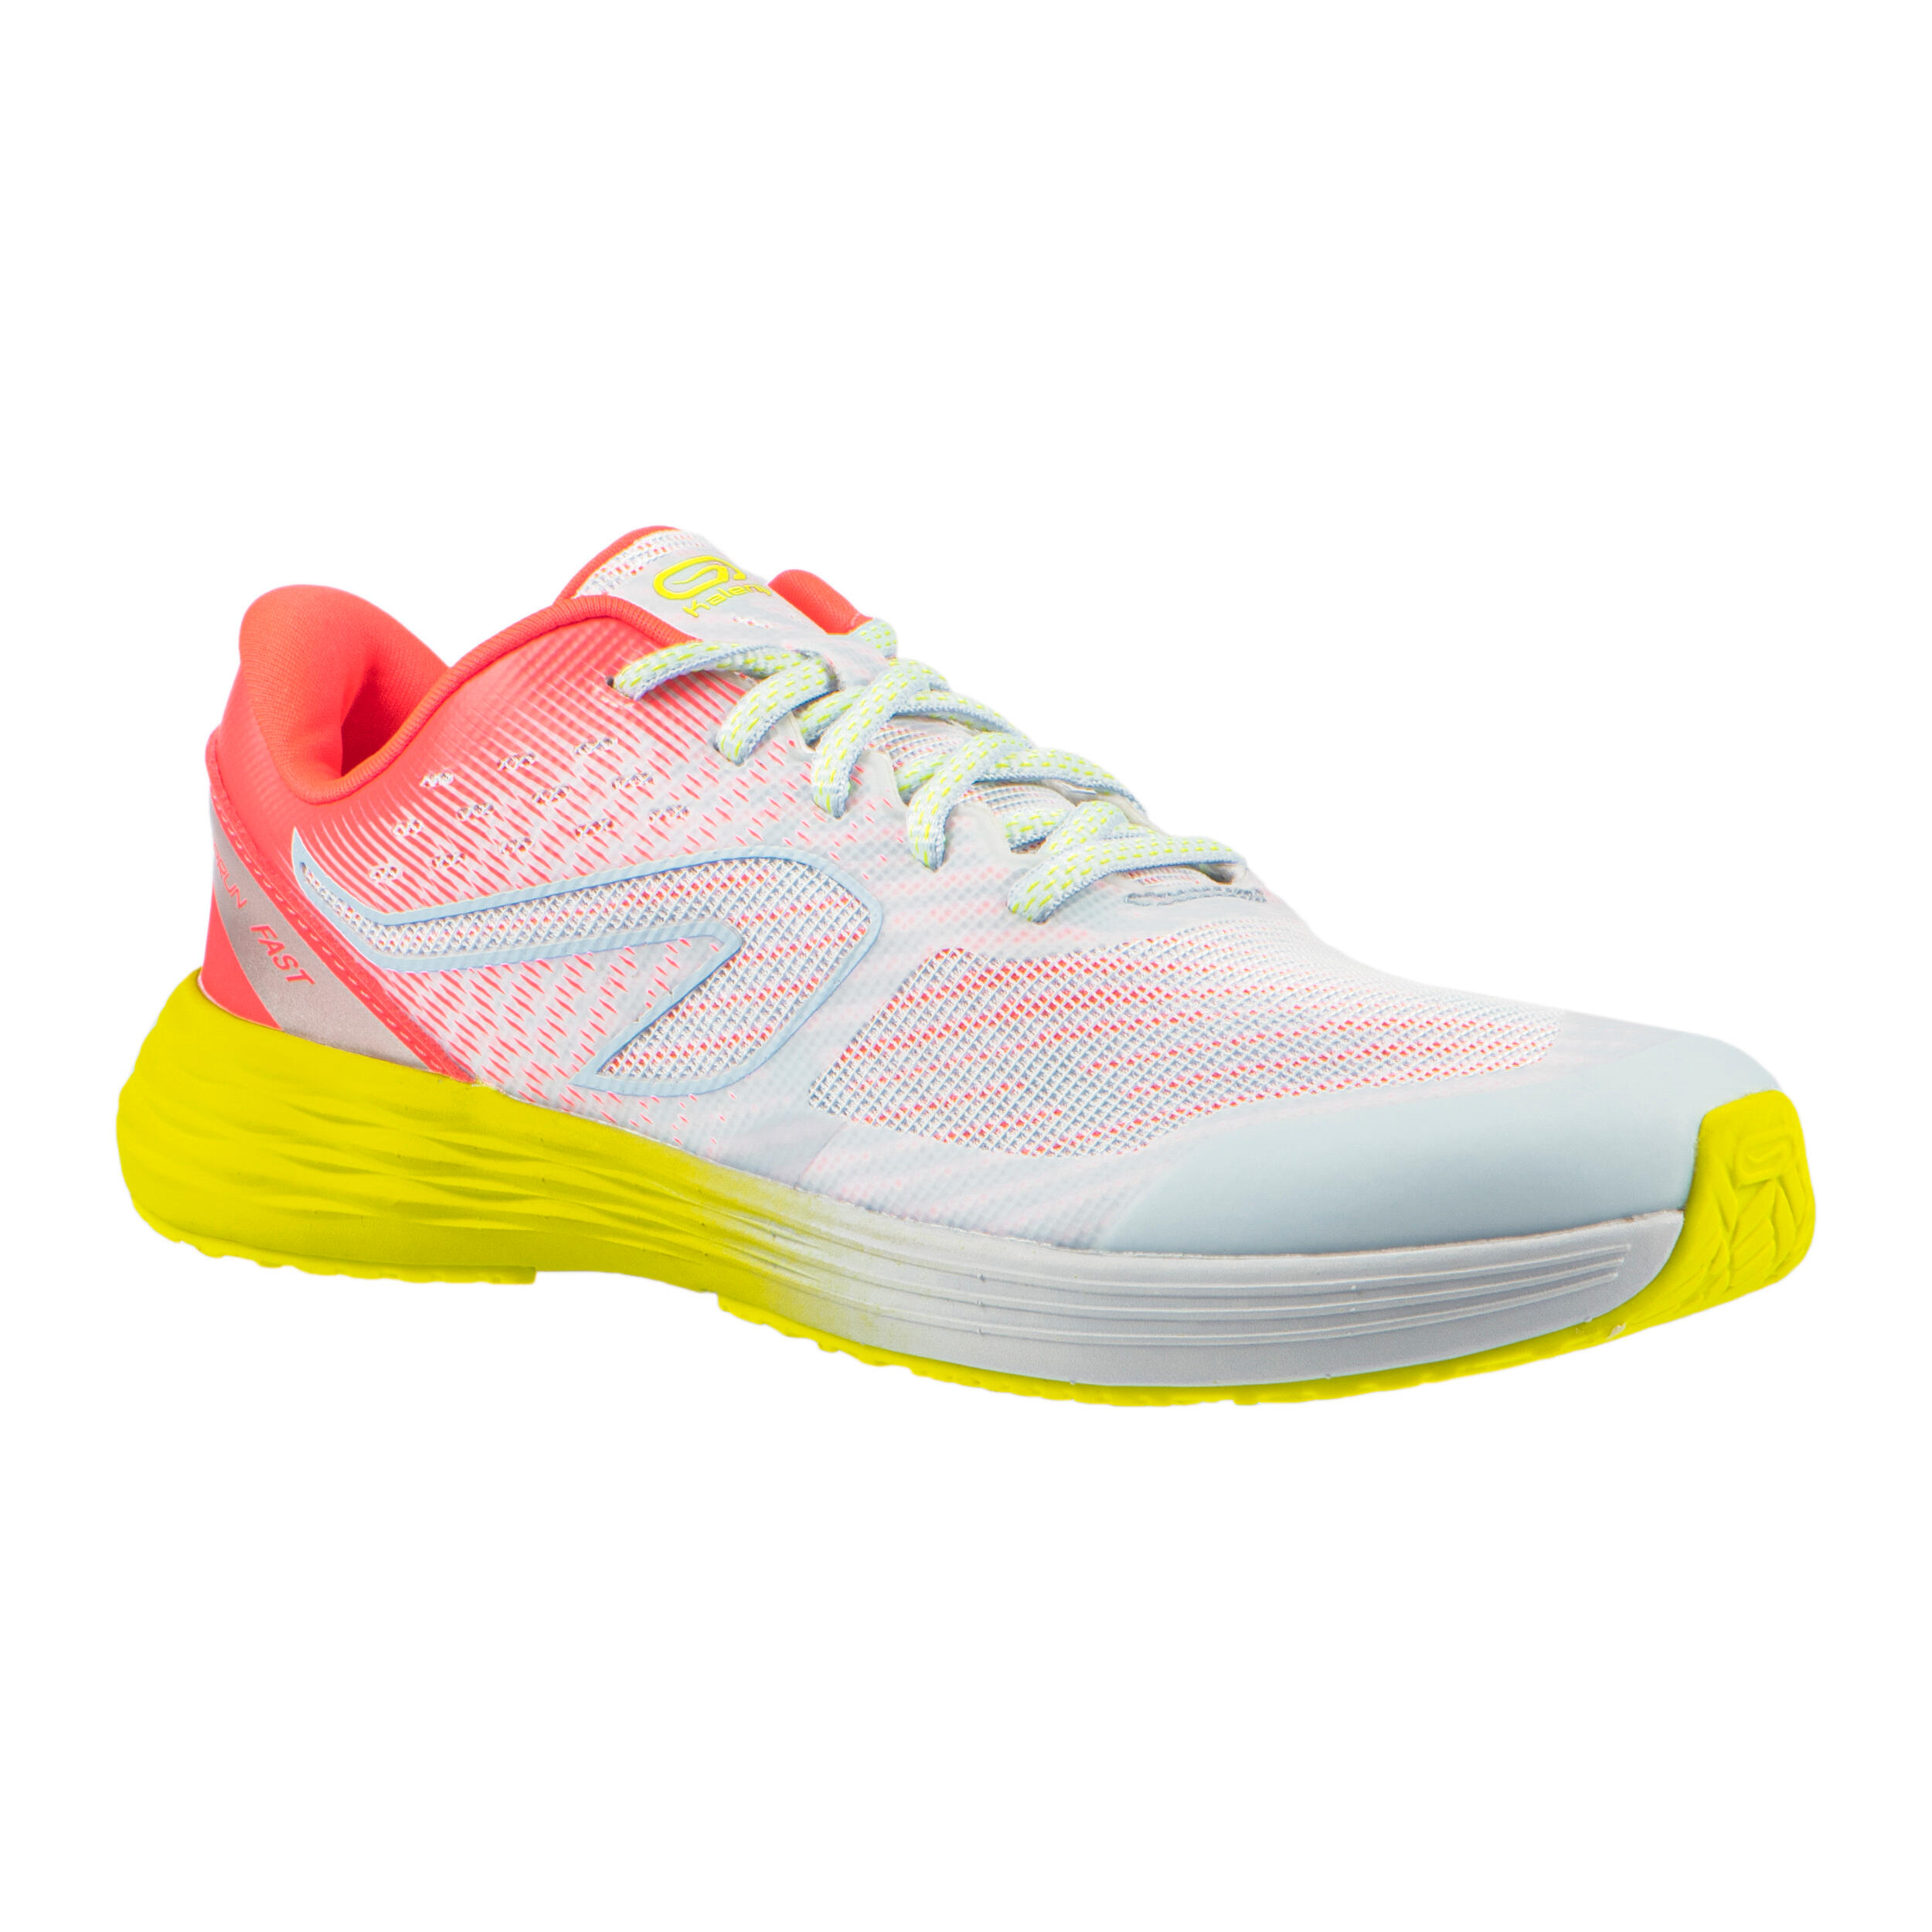 KIPRUN Kids' Athletics Shoes AT 500 Kiprun Fast - neon grey, pink and yellow